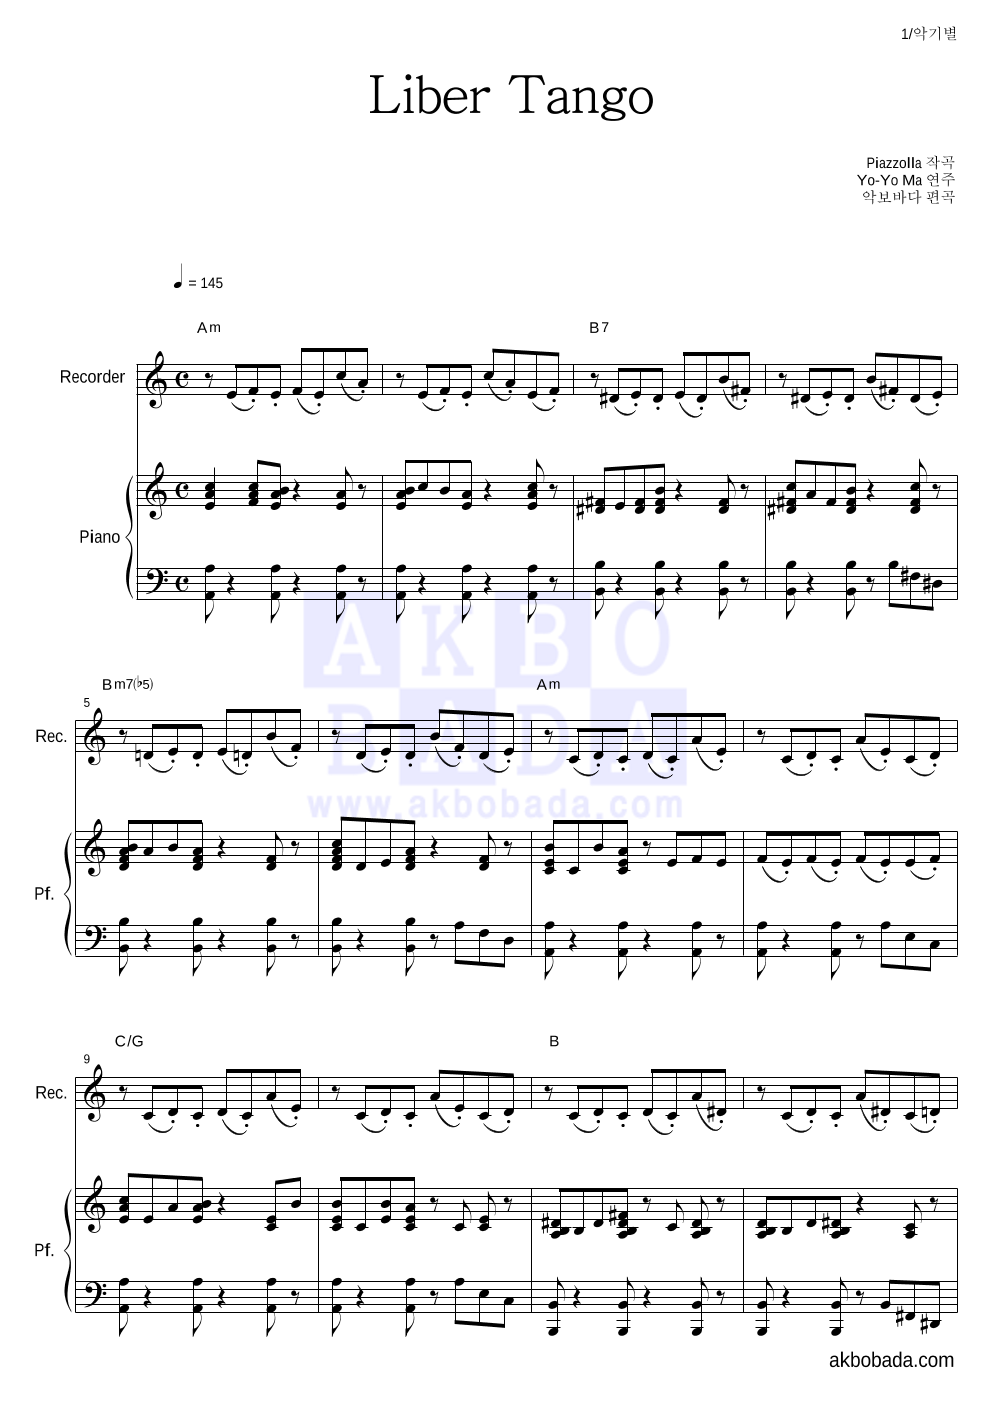 Yo-Yo Ma - Piazzolla - Libertango 리코더&피아노 악보 